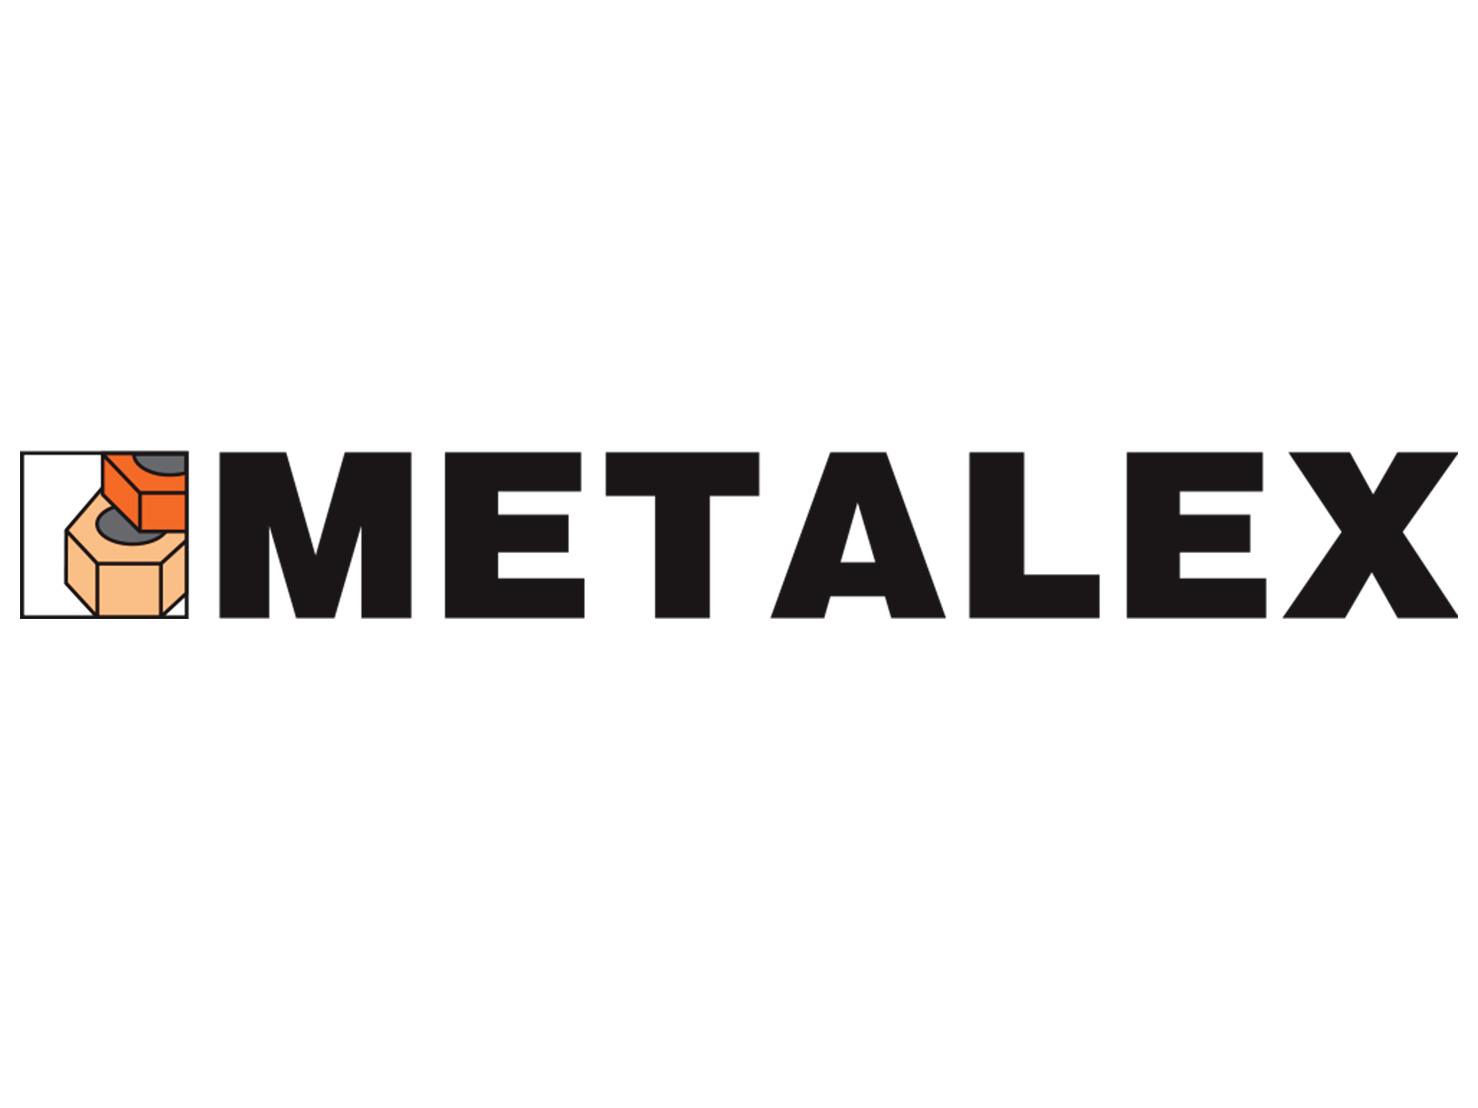 Metalex 2013